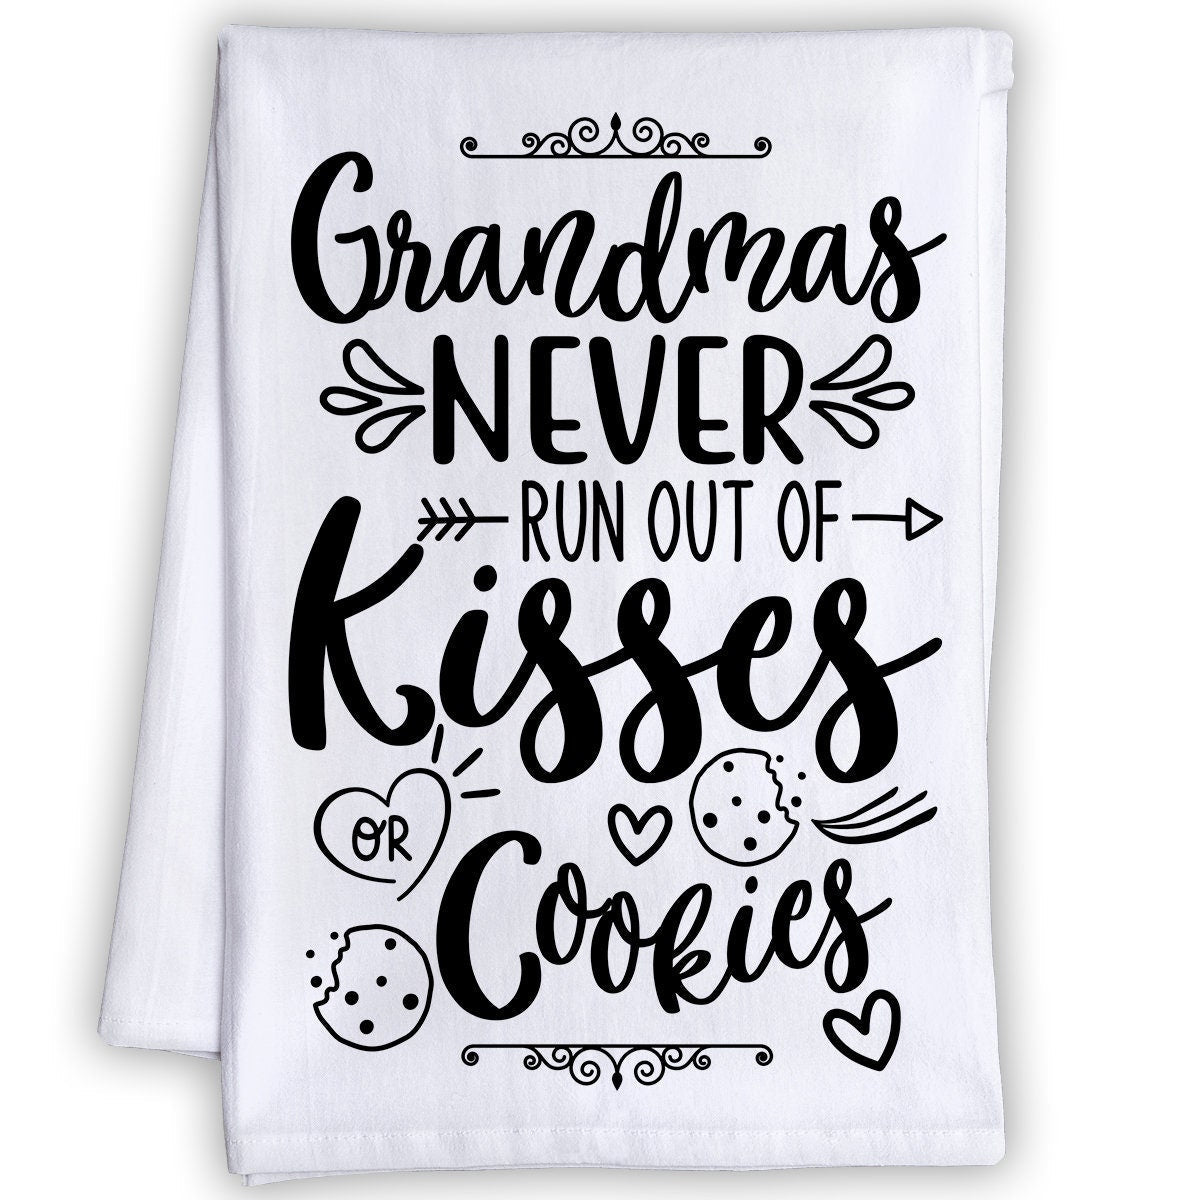 Funny Kitchen Tea Towels - Grandmas Never Run Out of Kisses or Cookies - Humorous Fun Sayings - Cute Housewarming Gift/Fun Home Decor Lone Star Art 